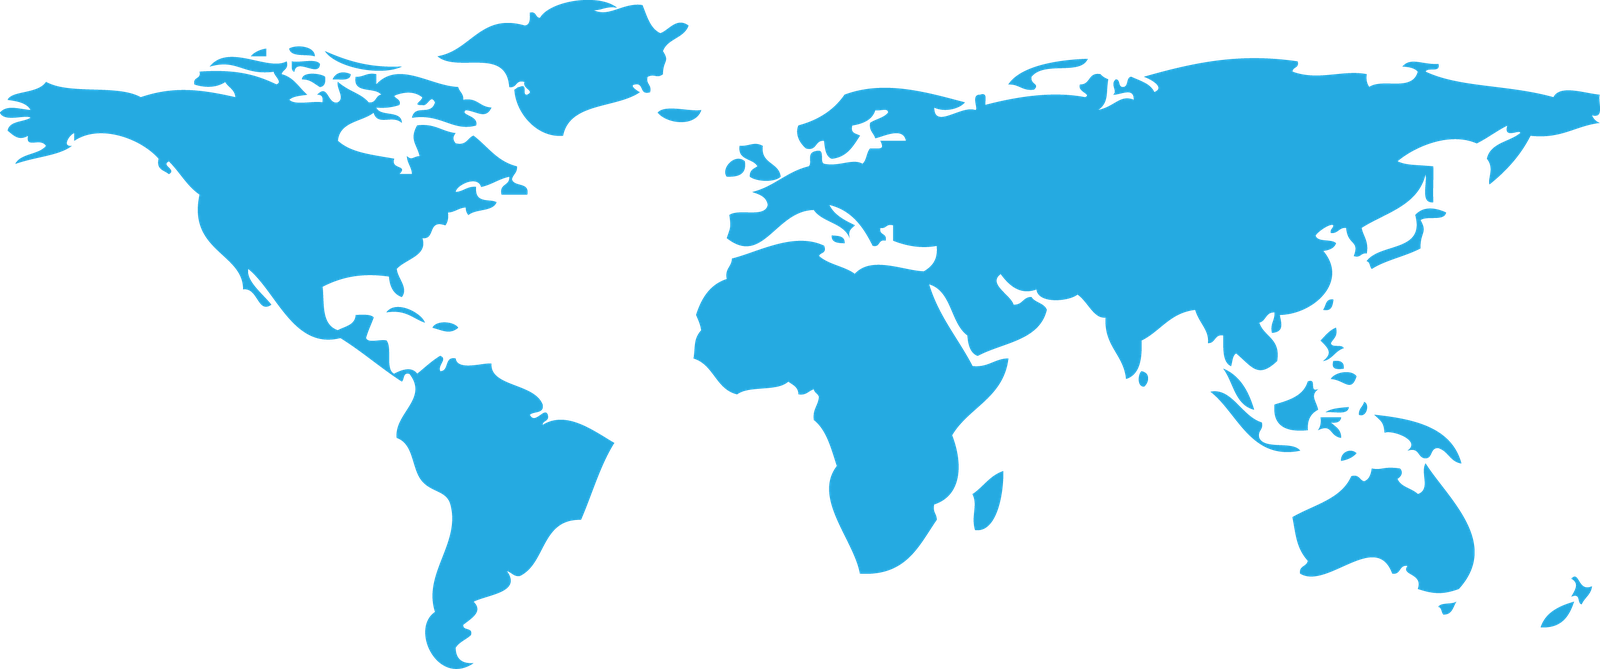 दुनिया का नक्शा